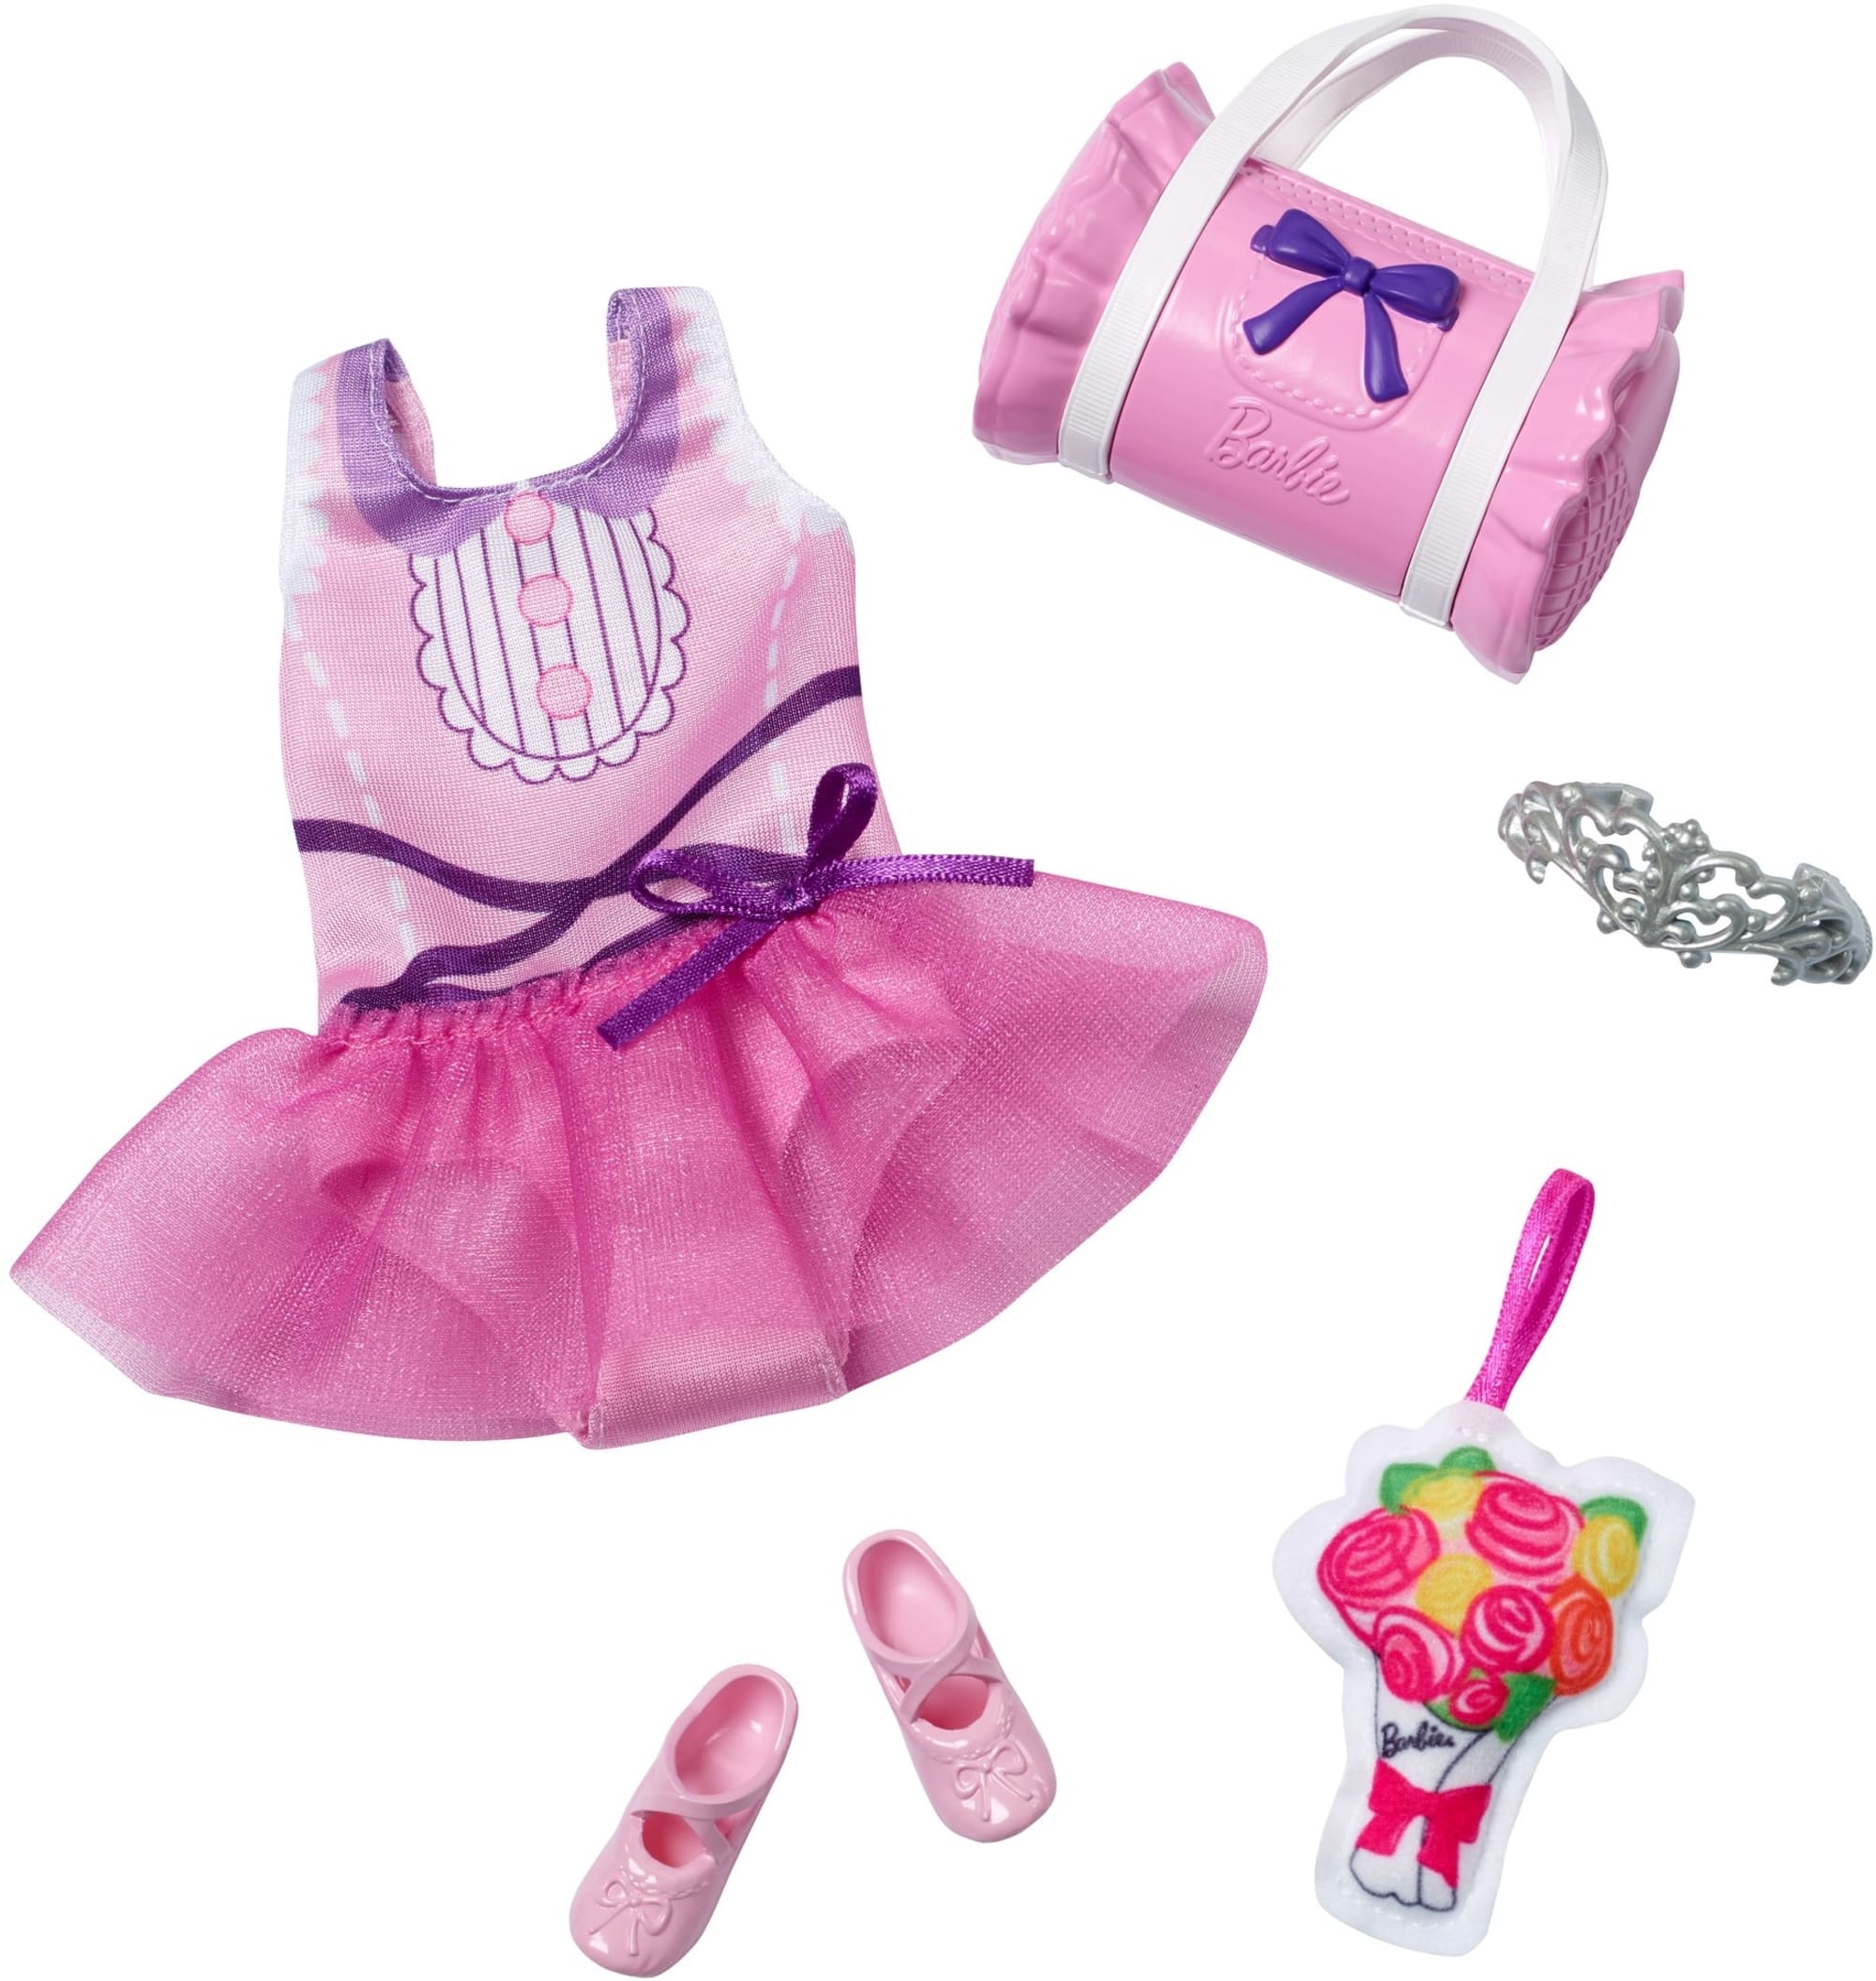 Barbie Accessories for Preschoolers Birthday My First - 1 Each